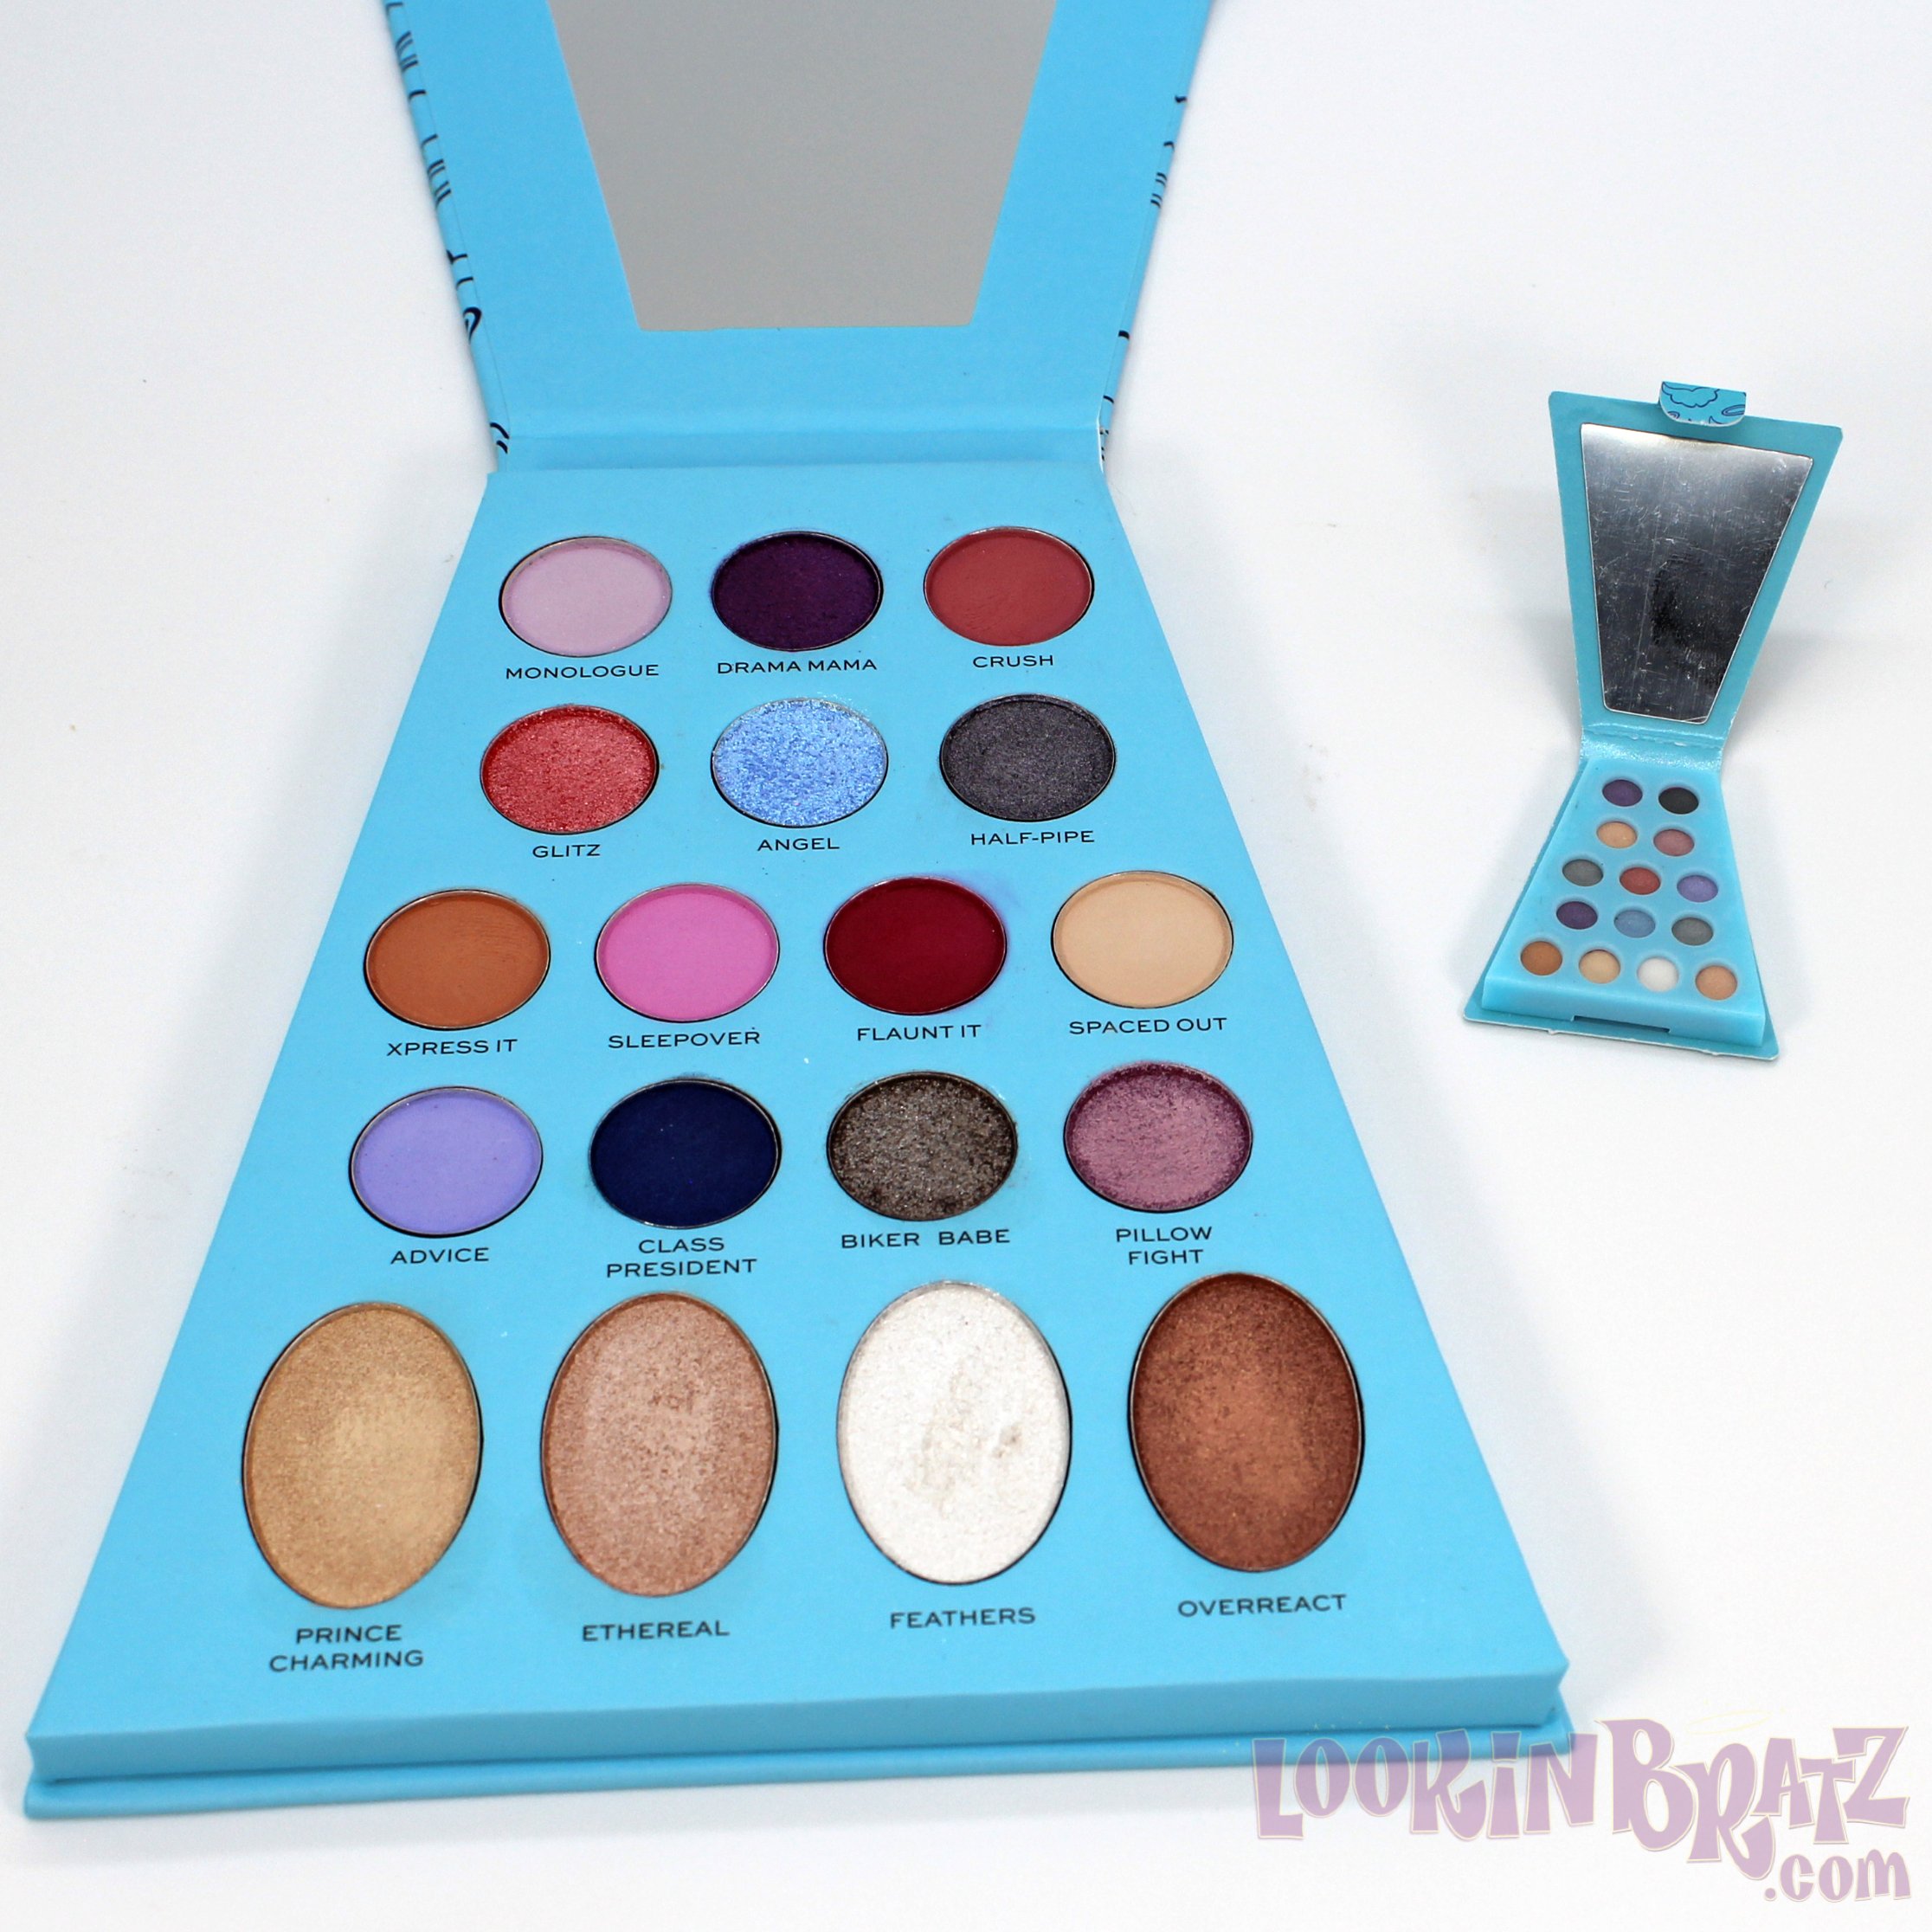 Mini Bratz Cosmetics First Edition Cloe Shadow Palette and Revolution Palette Comparison (Inside)